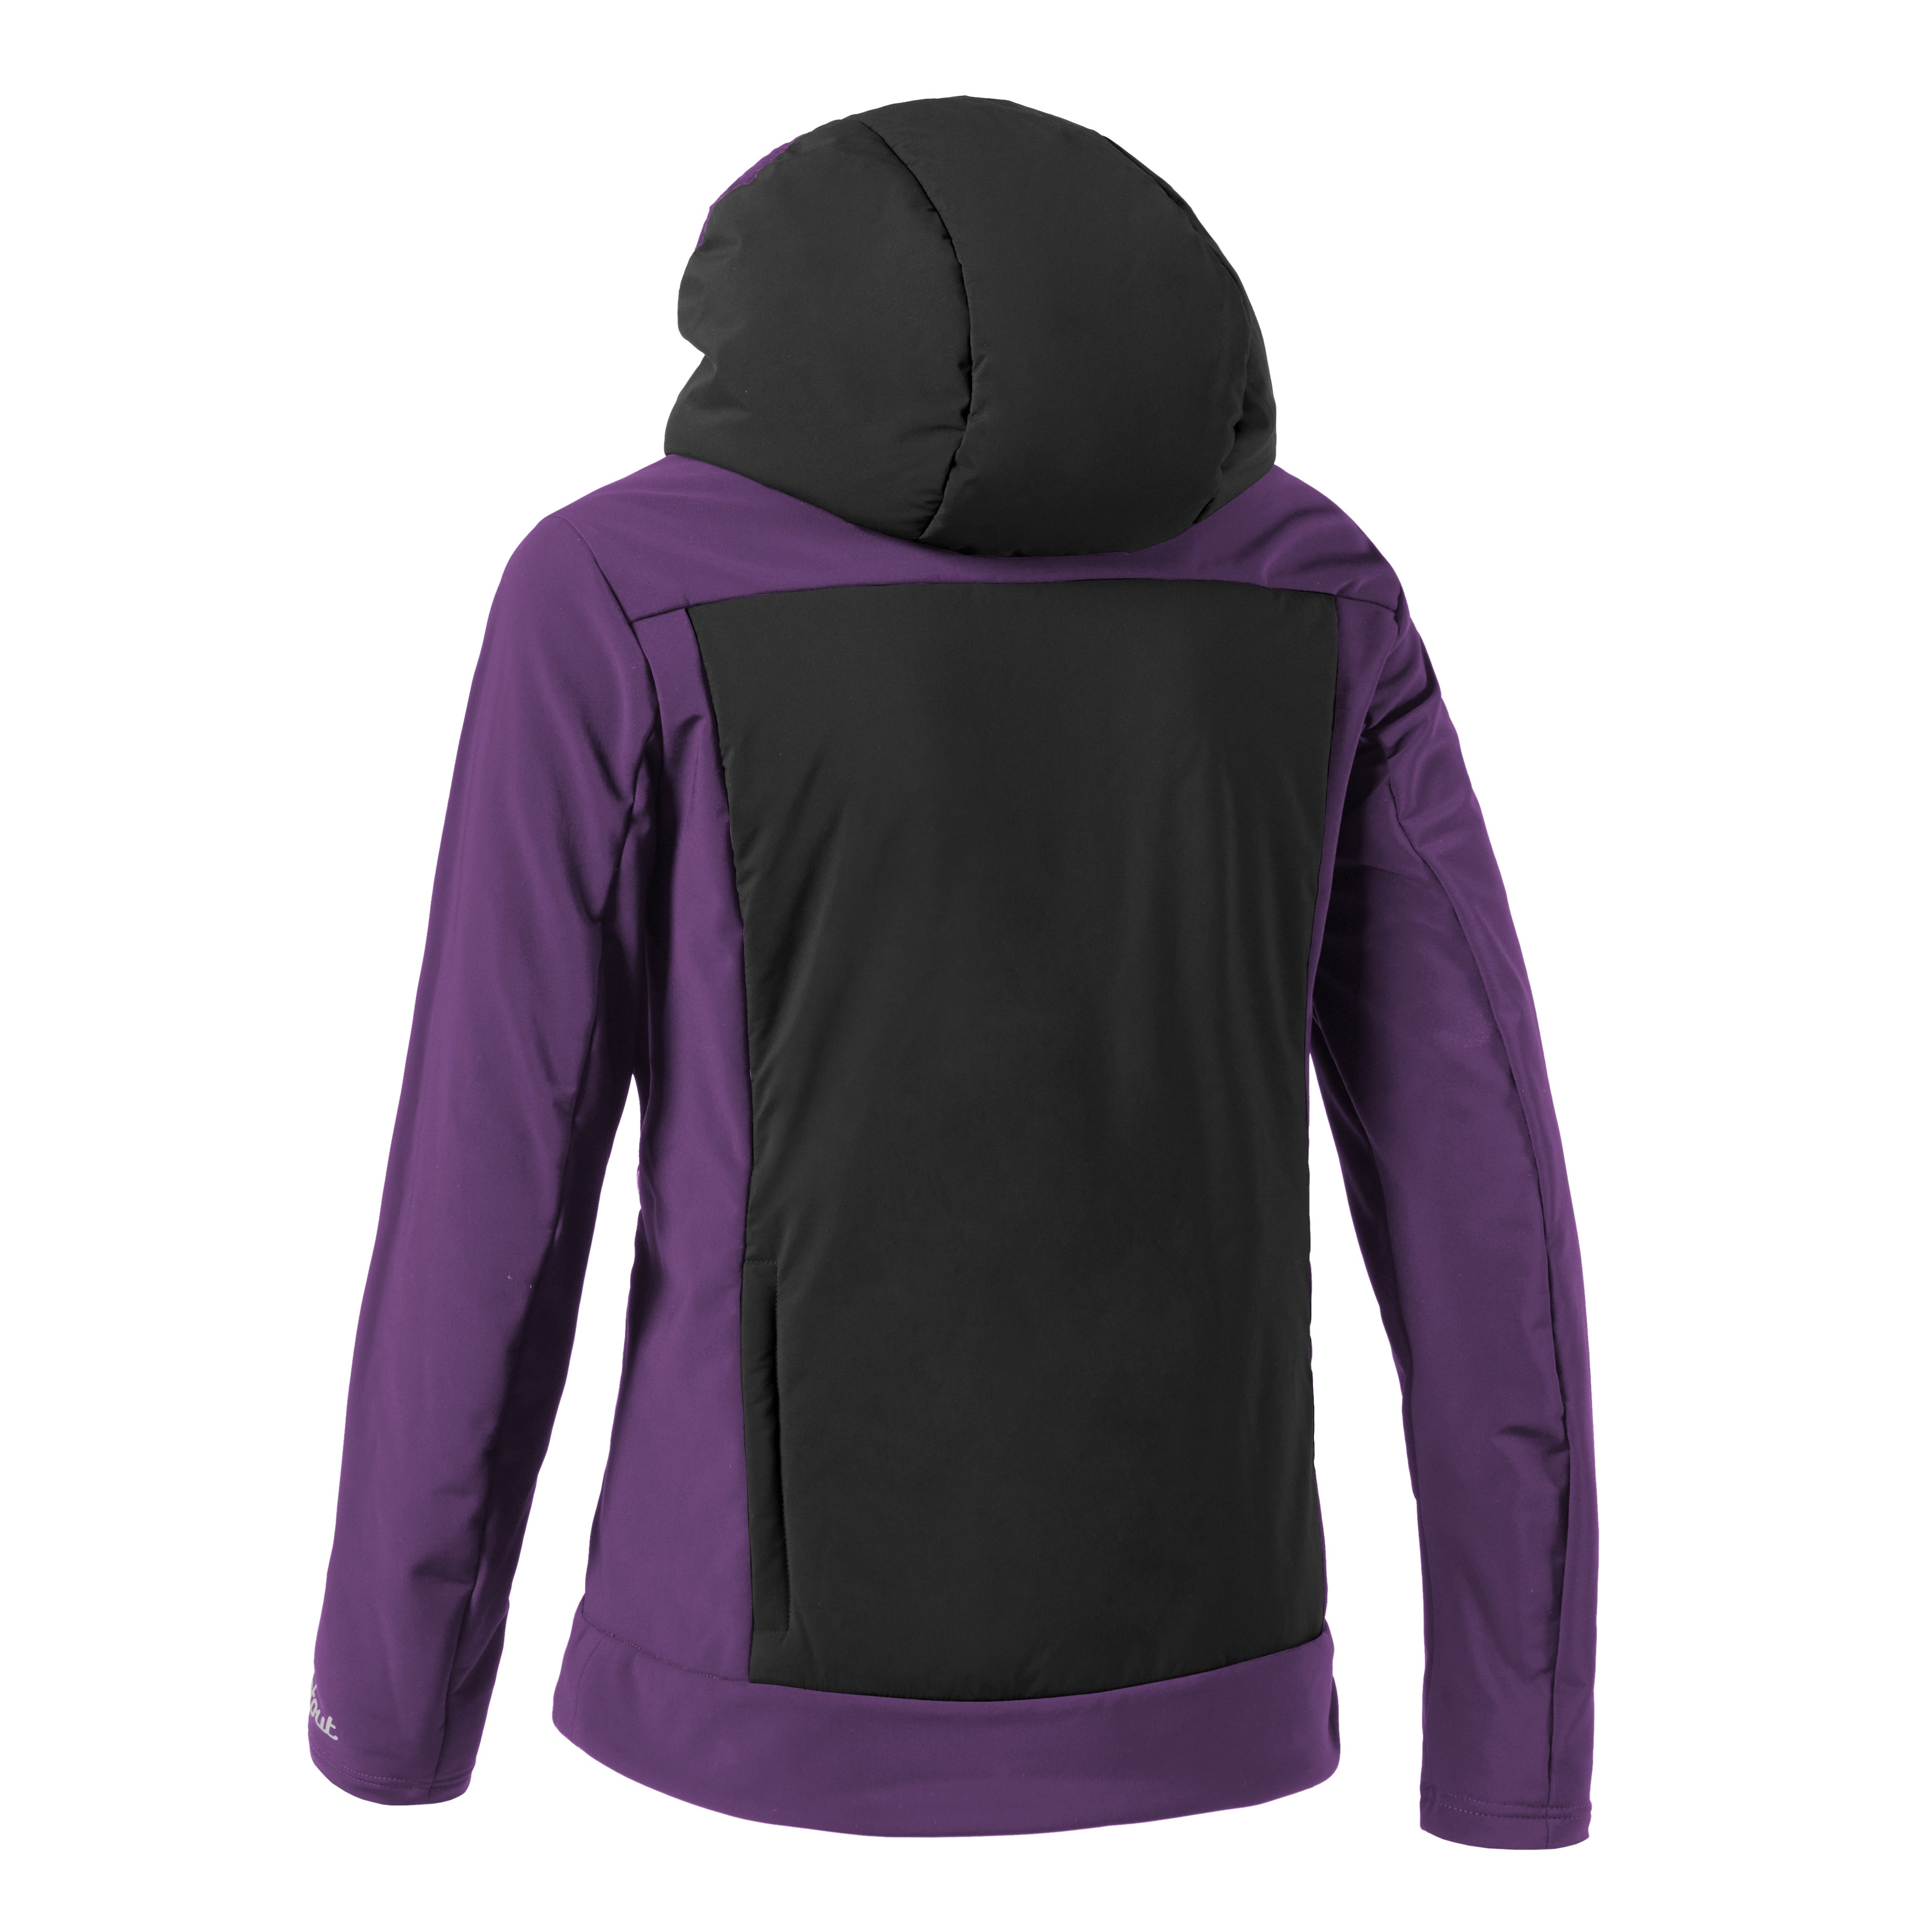 Dotout Altitude frau jacket - Schwarz violett